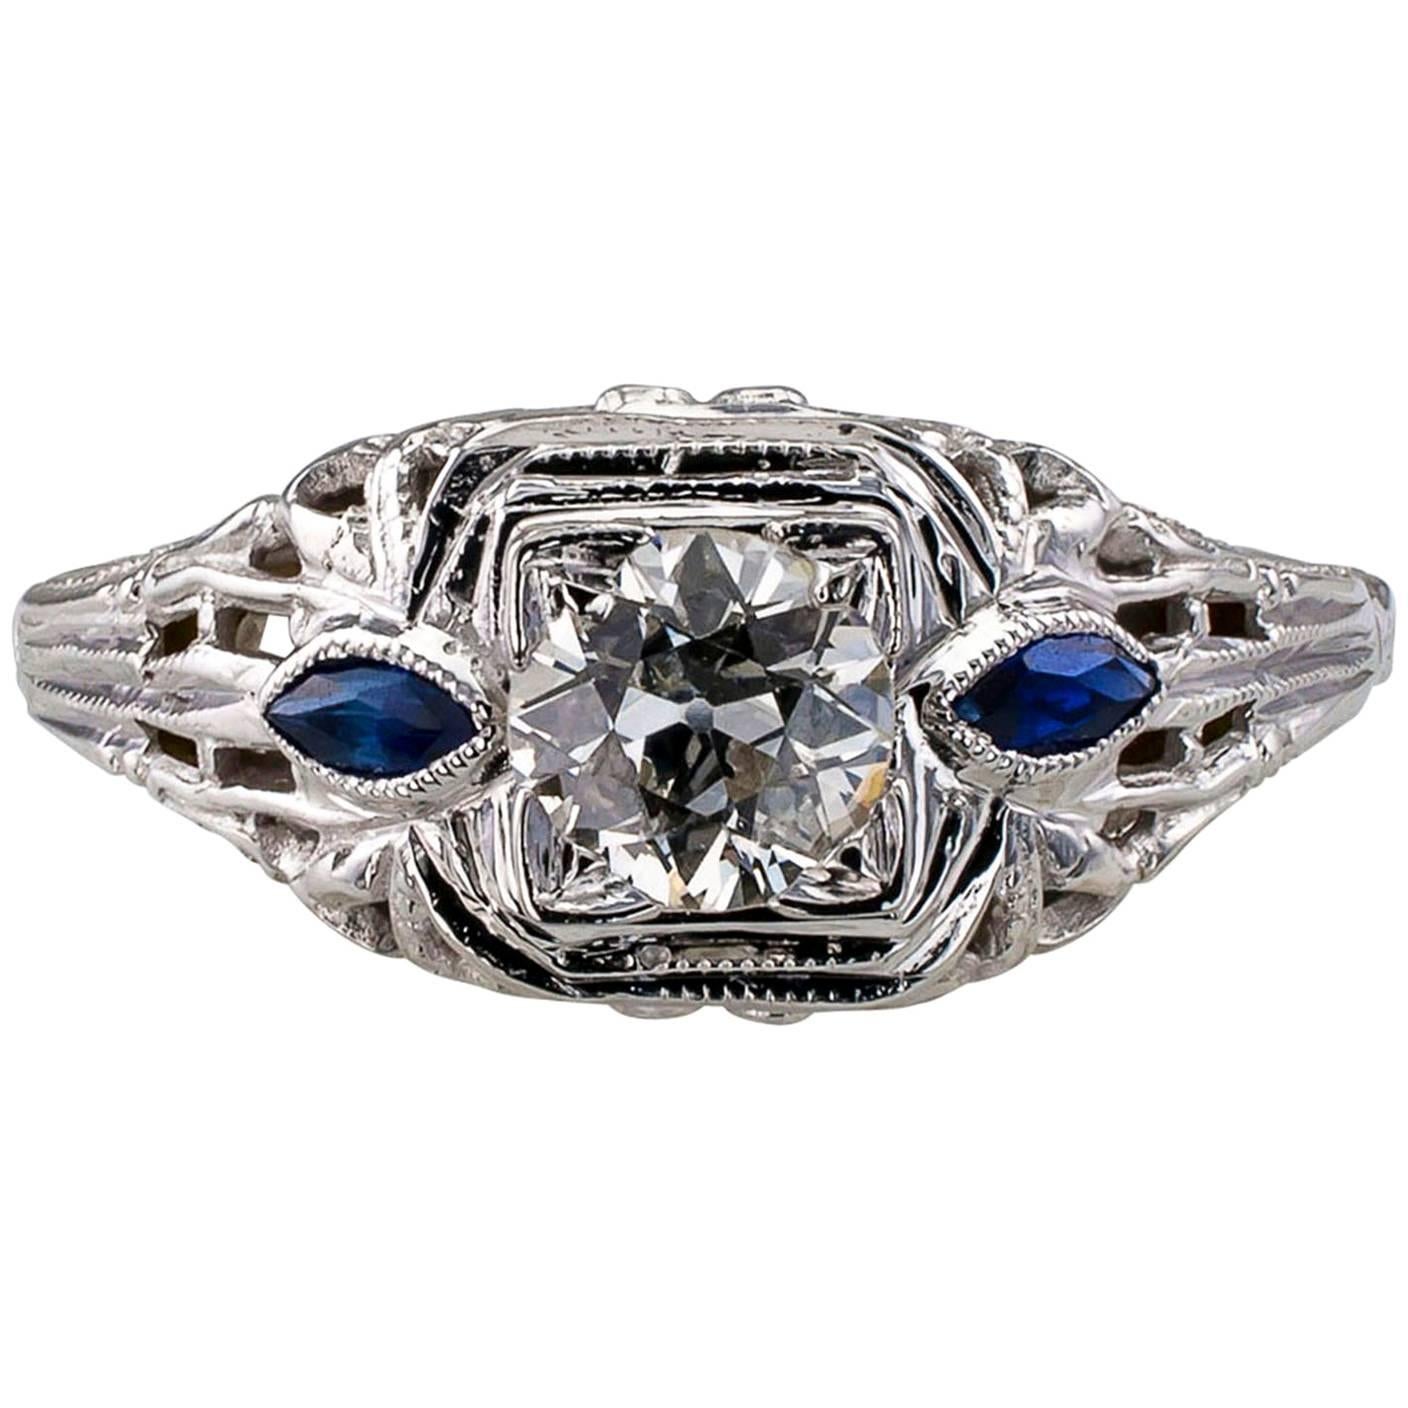 1930s Art Deco Old European Cut 0.42 Carat Diamond Engagement Ring